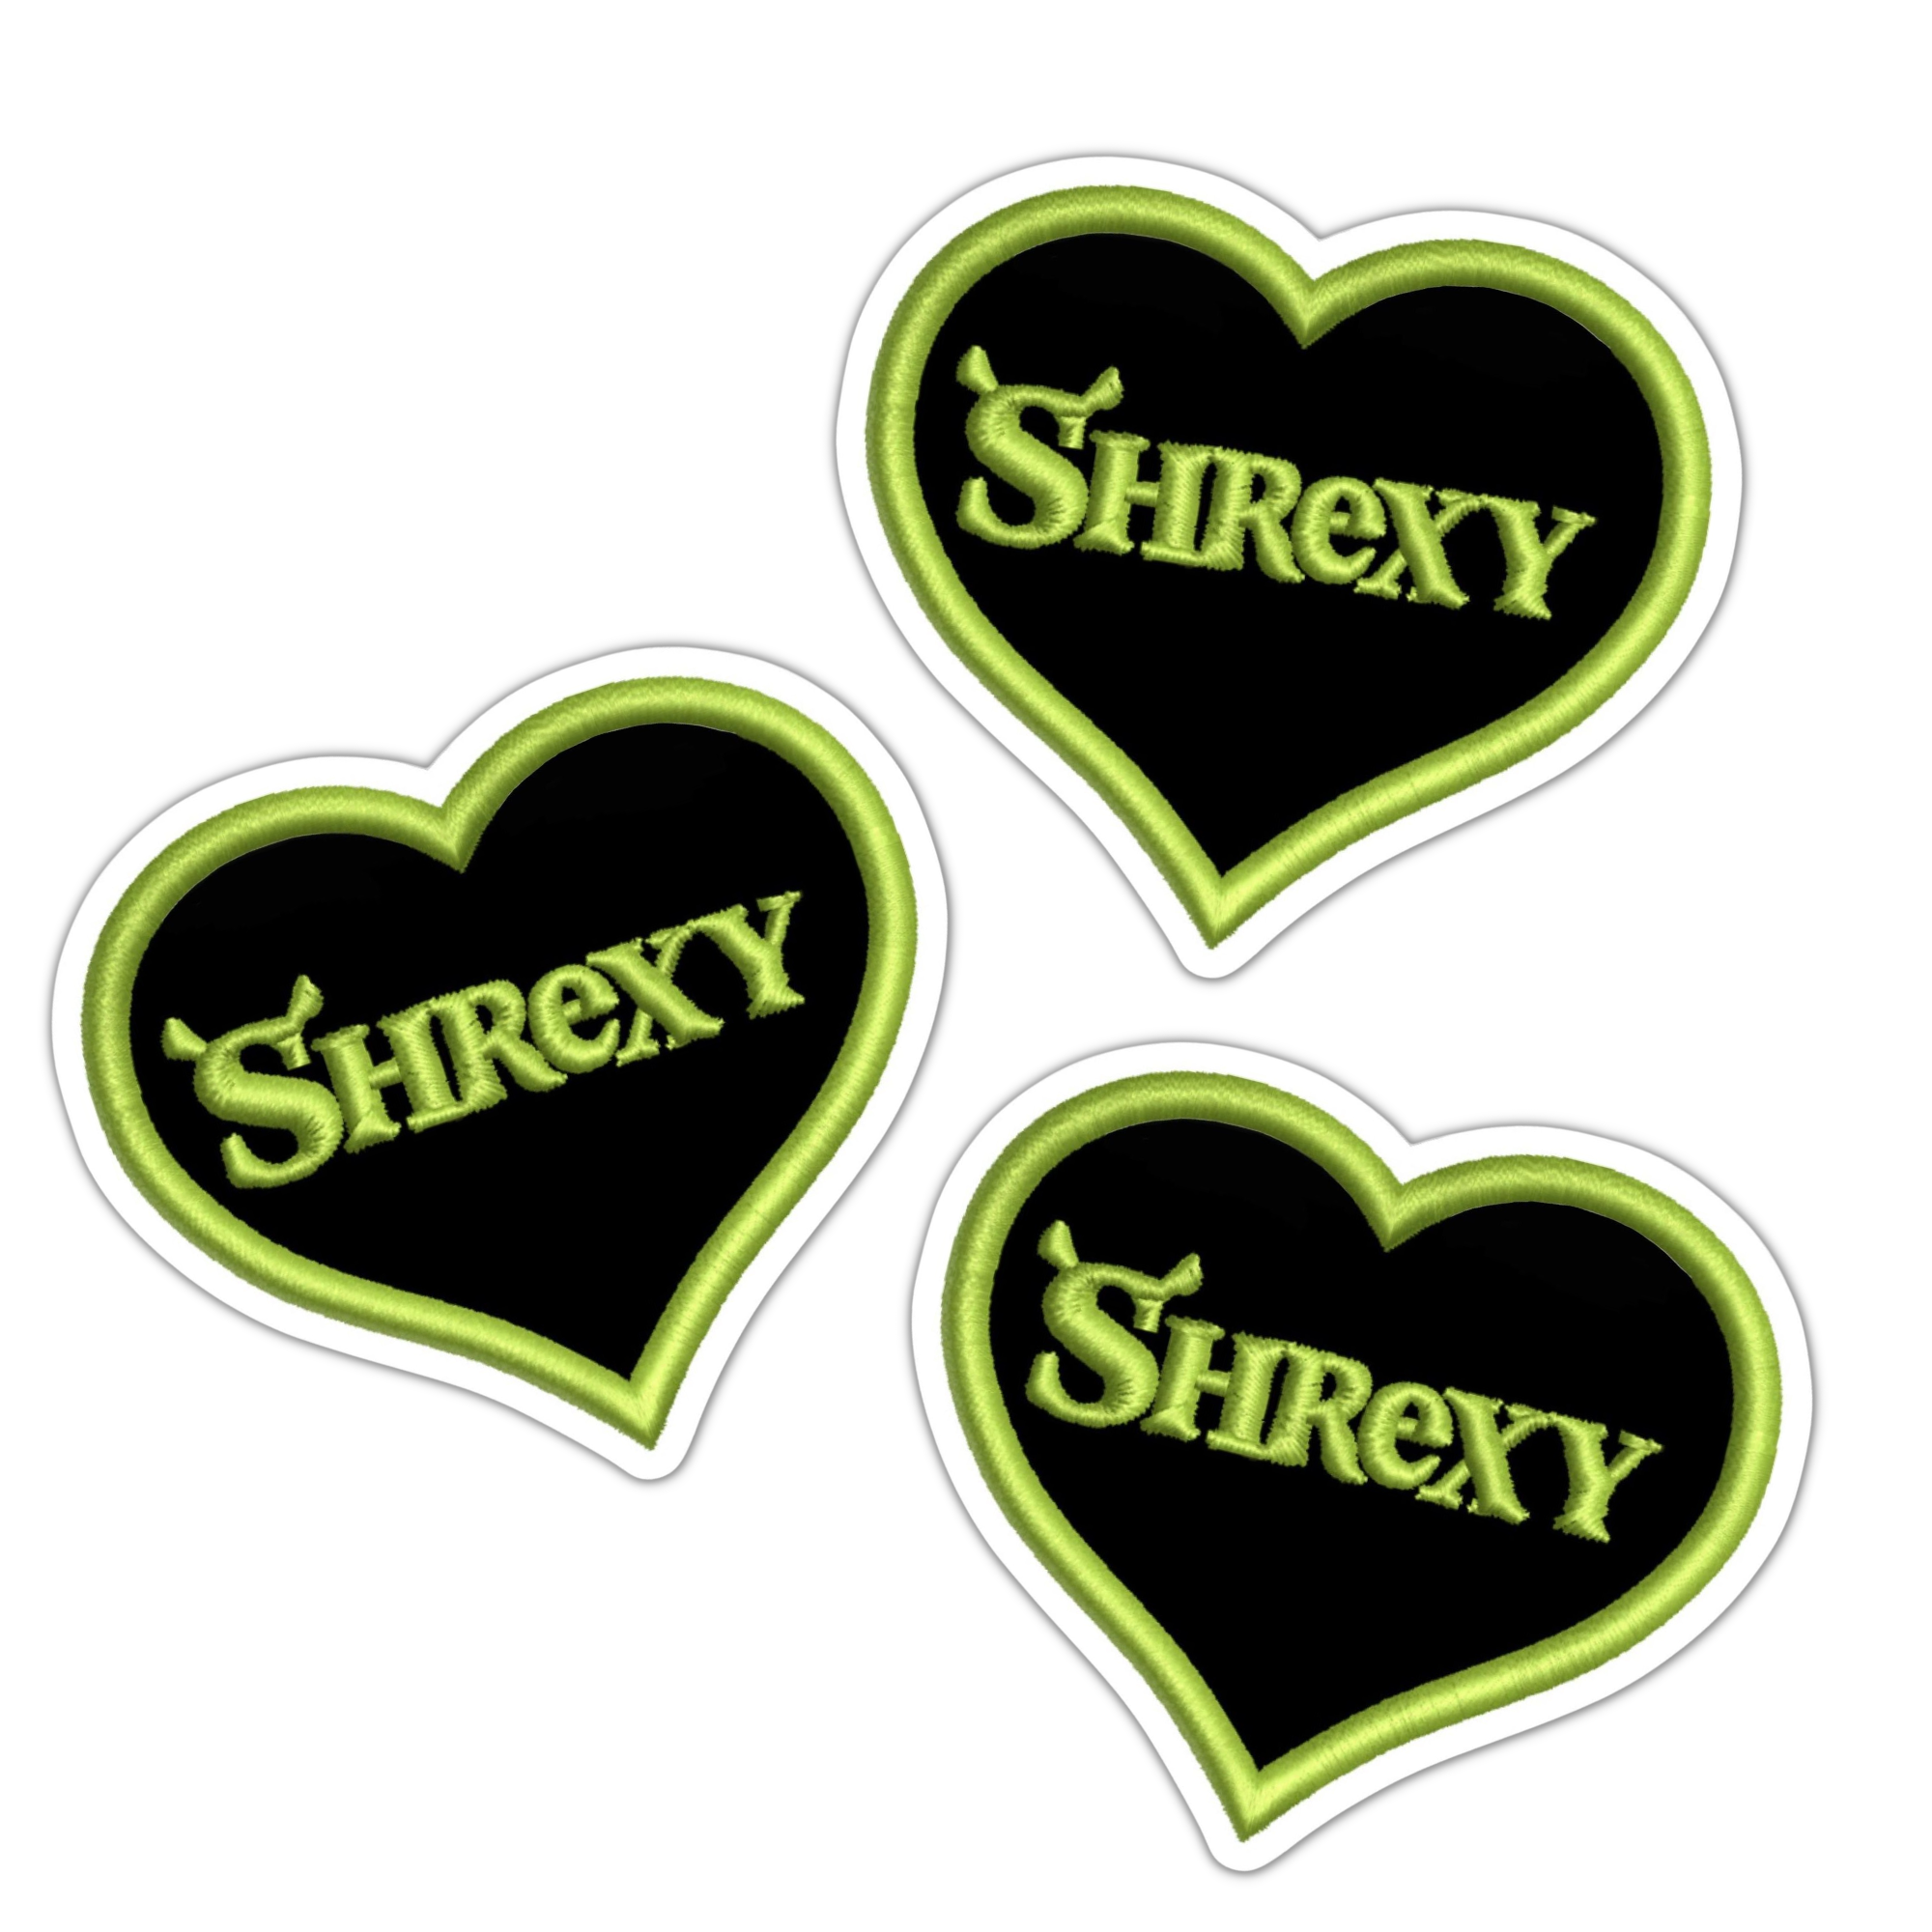 Shrexy Ogre Black and Green Vinyl Heart Sticker